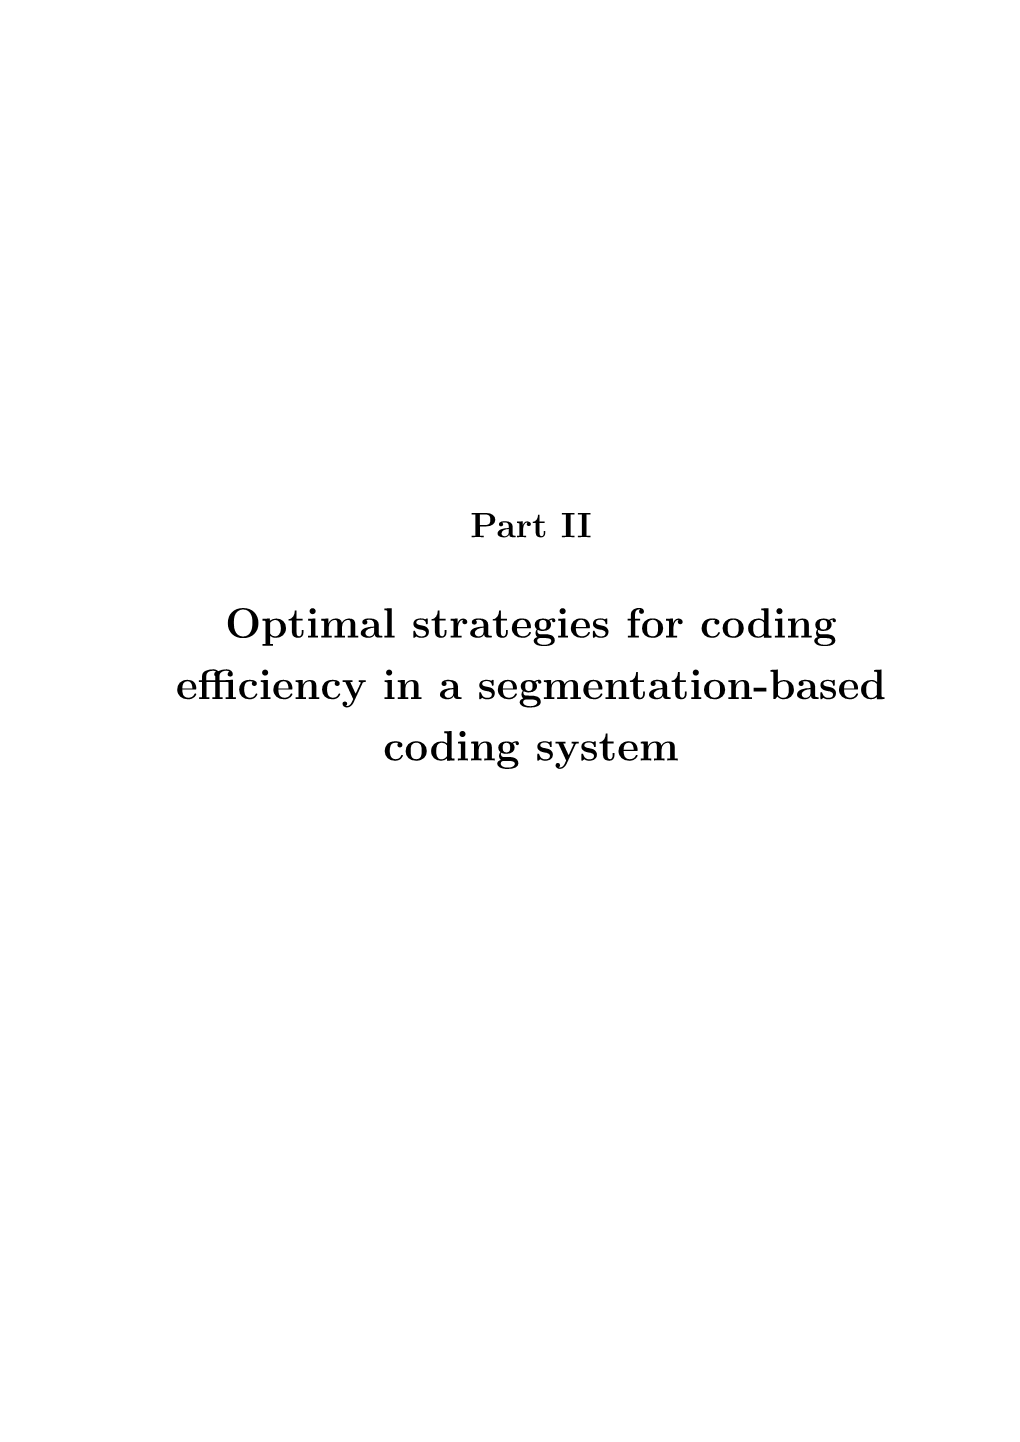 Optimal Strategies for Coding Efficiency in a Segmentation-Based Coding